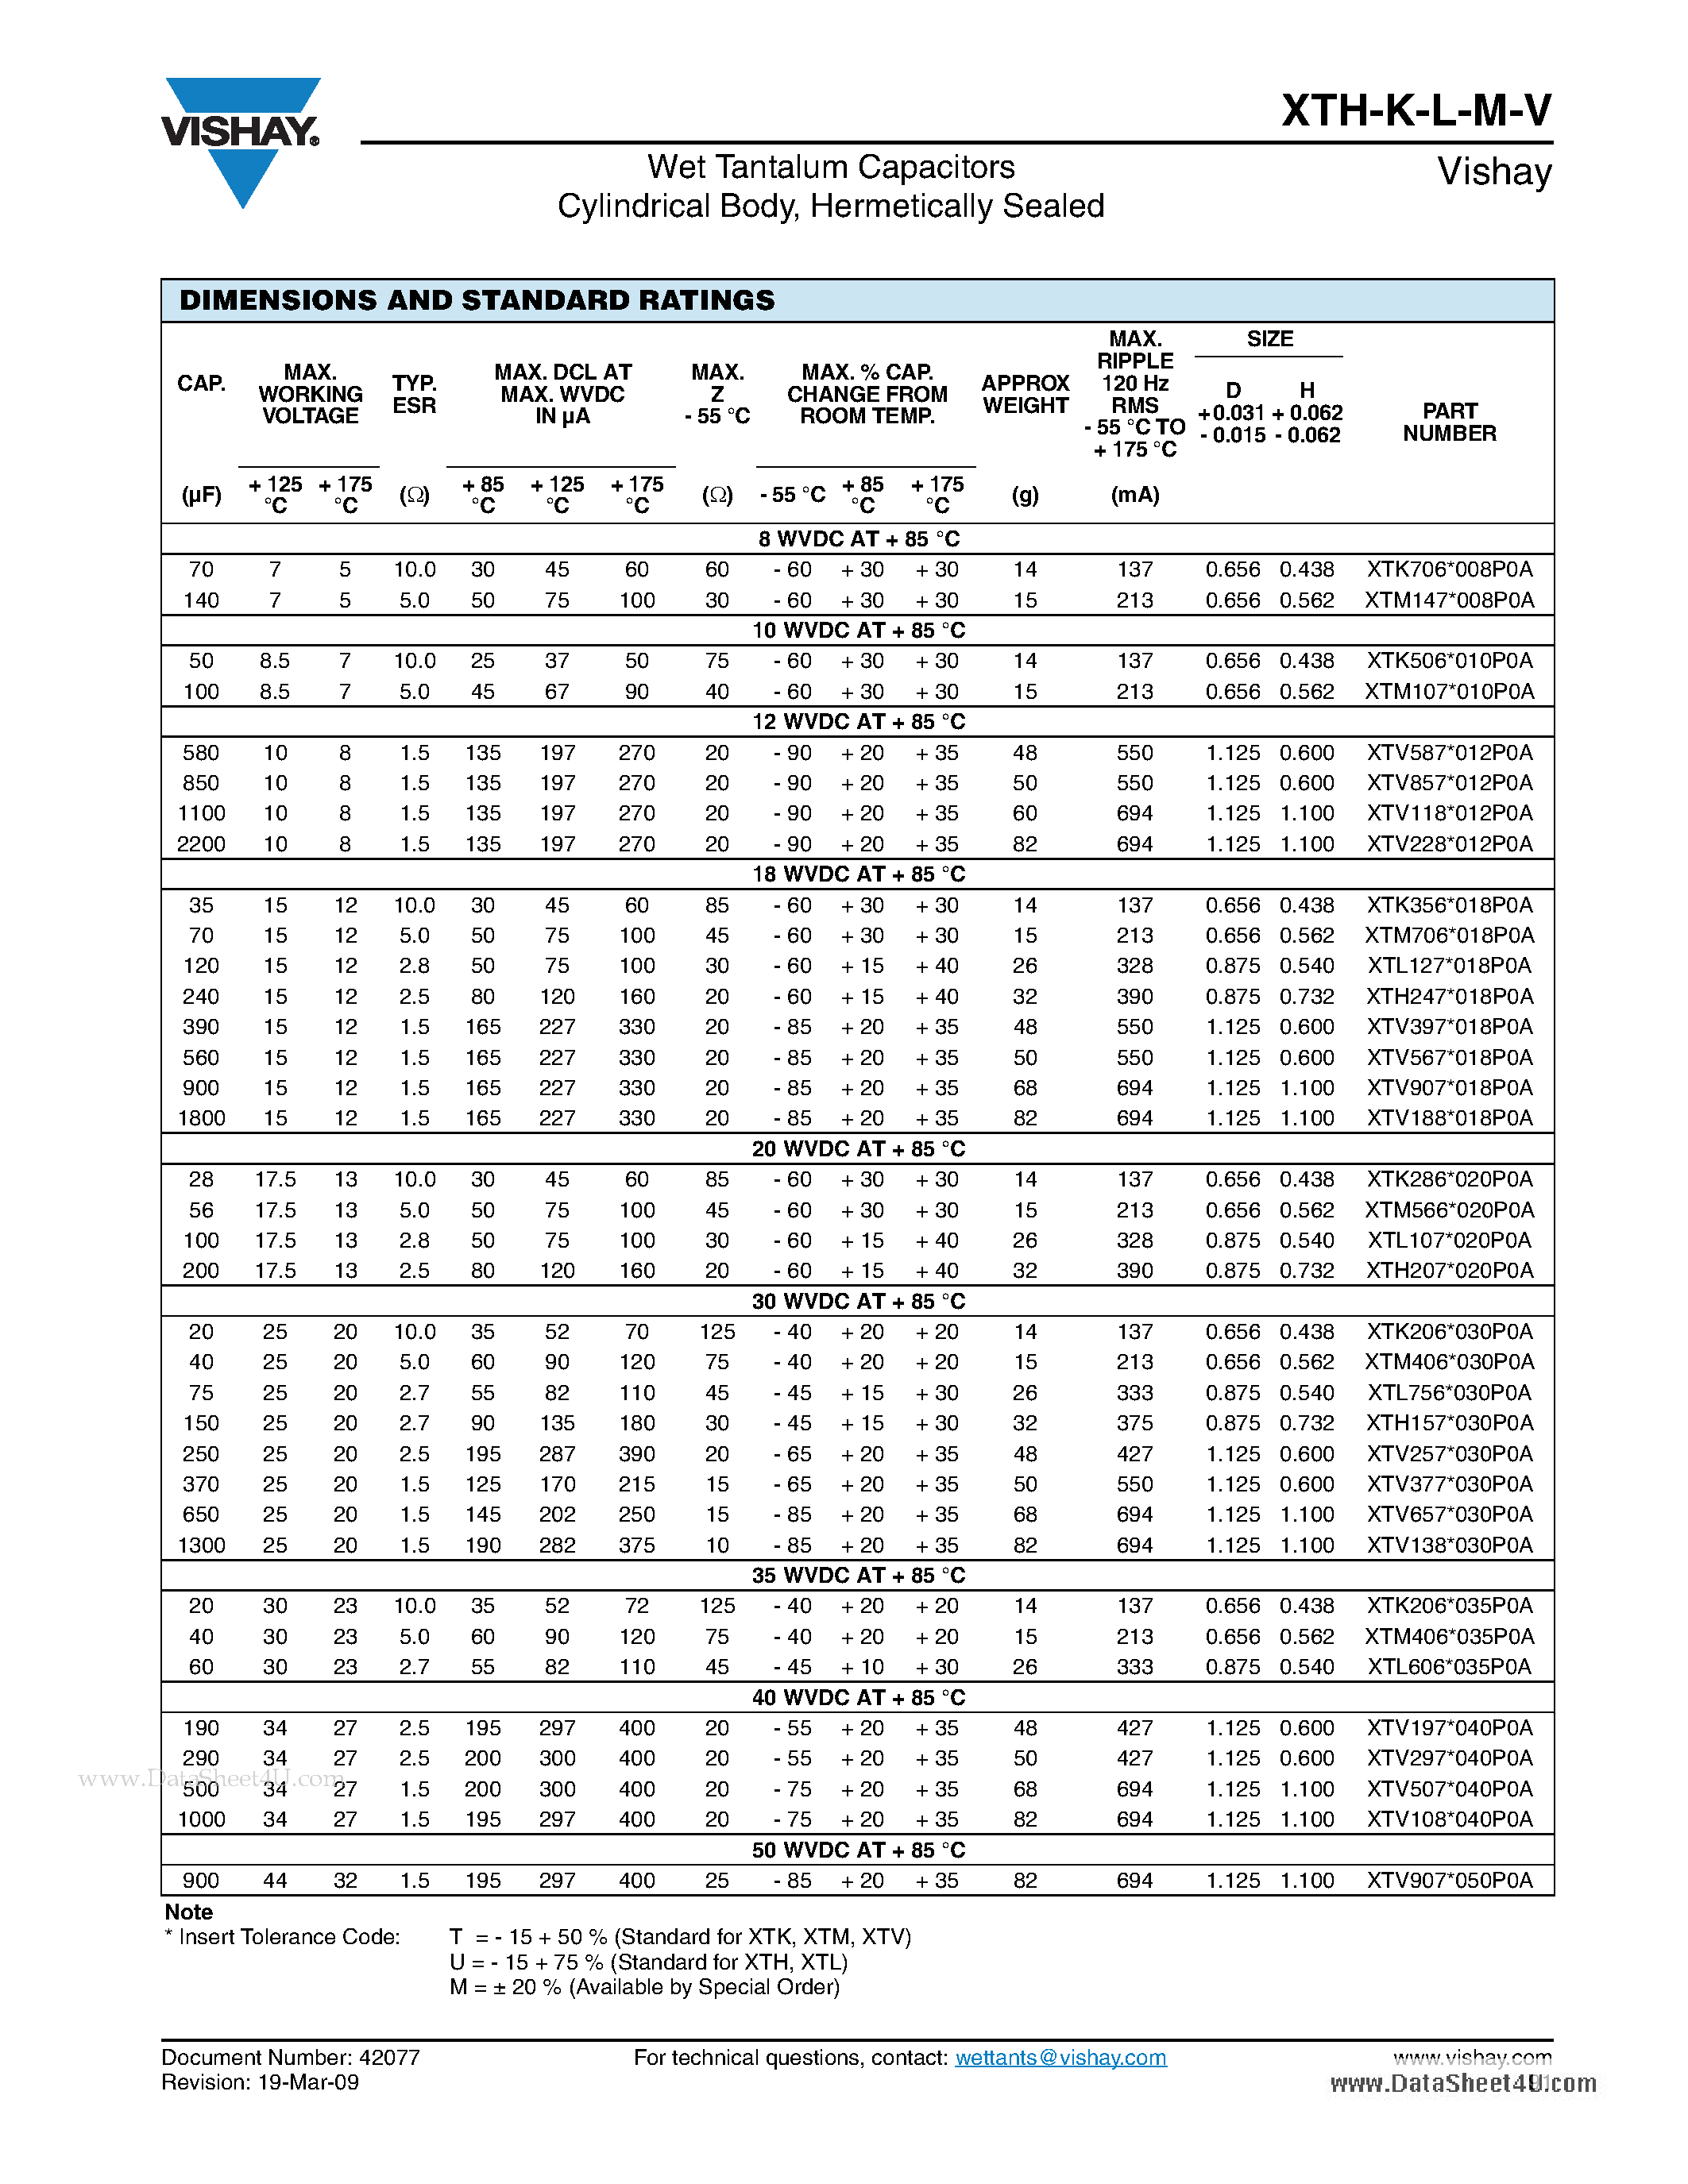 Datasheet XTL107*020P0A - Wet Tantalum Capacitors page 2